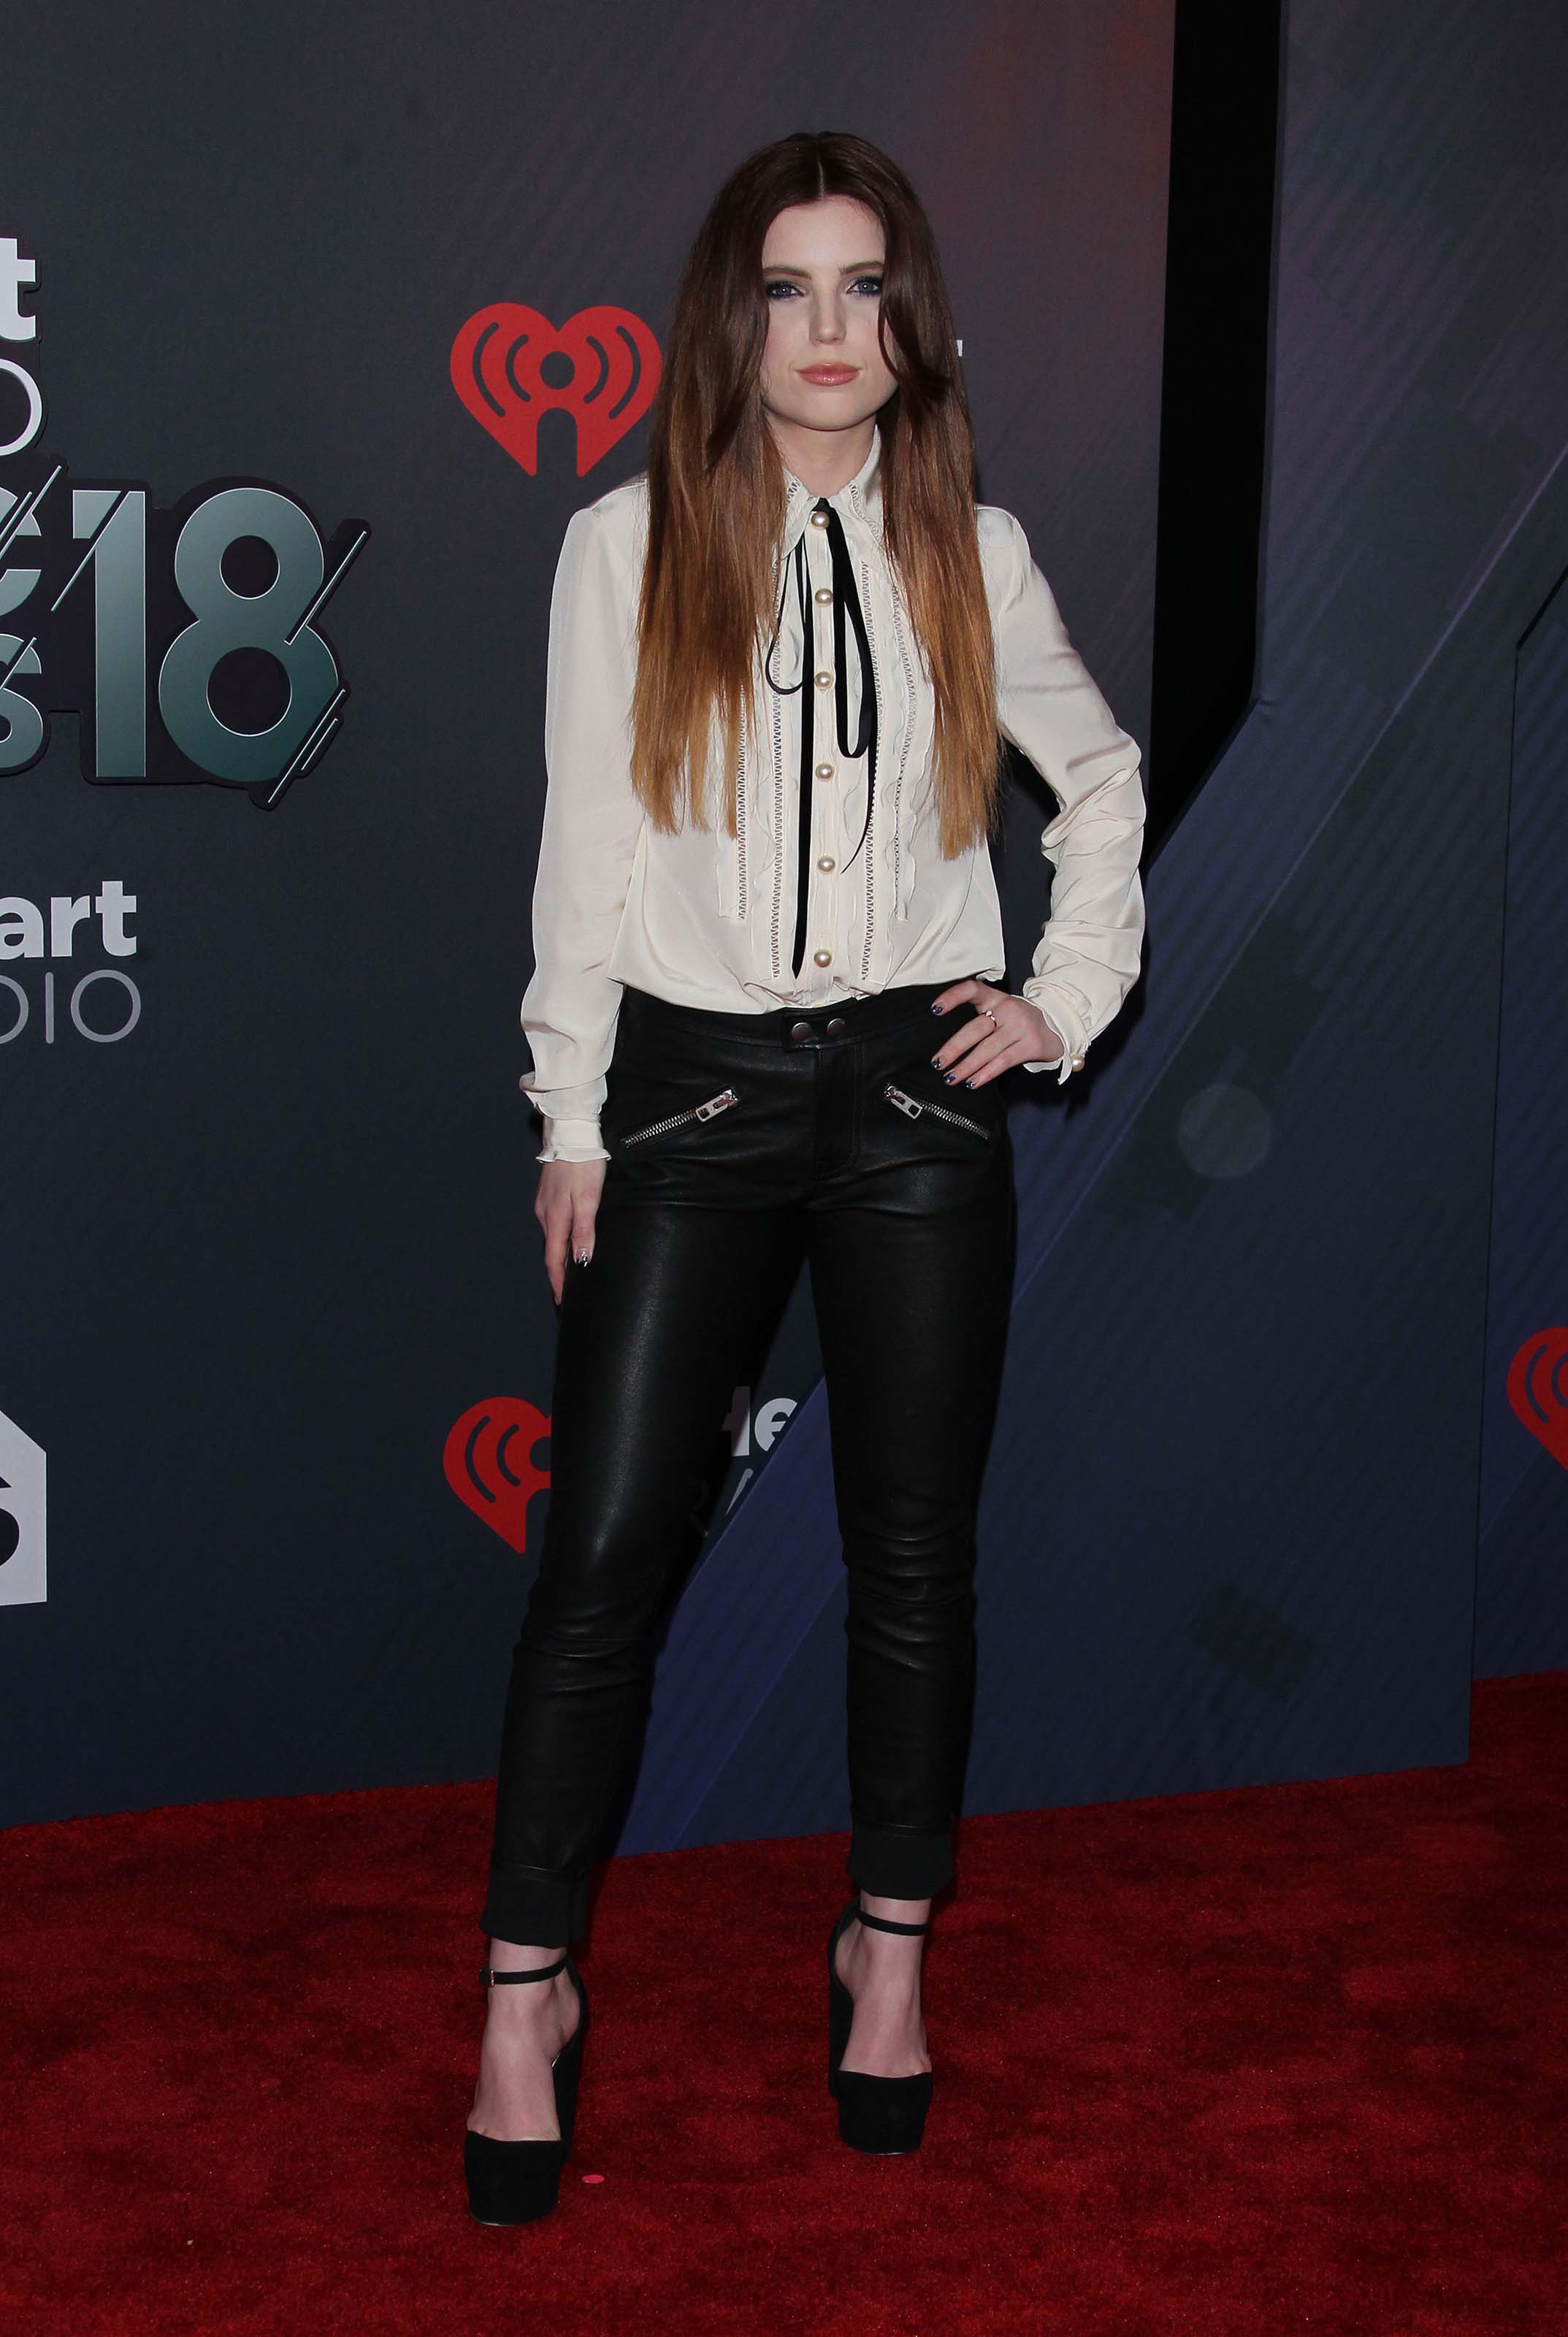 Sydney Sierota attends iHeartRadio Music Awards